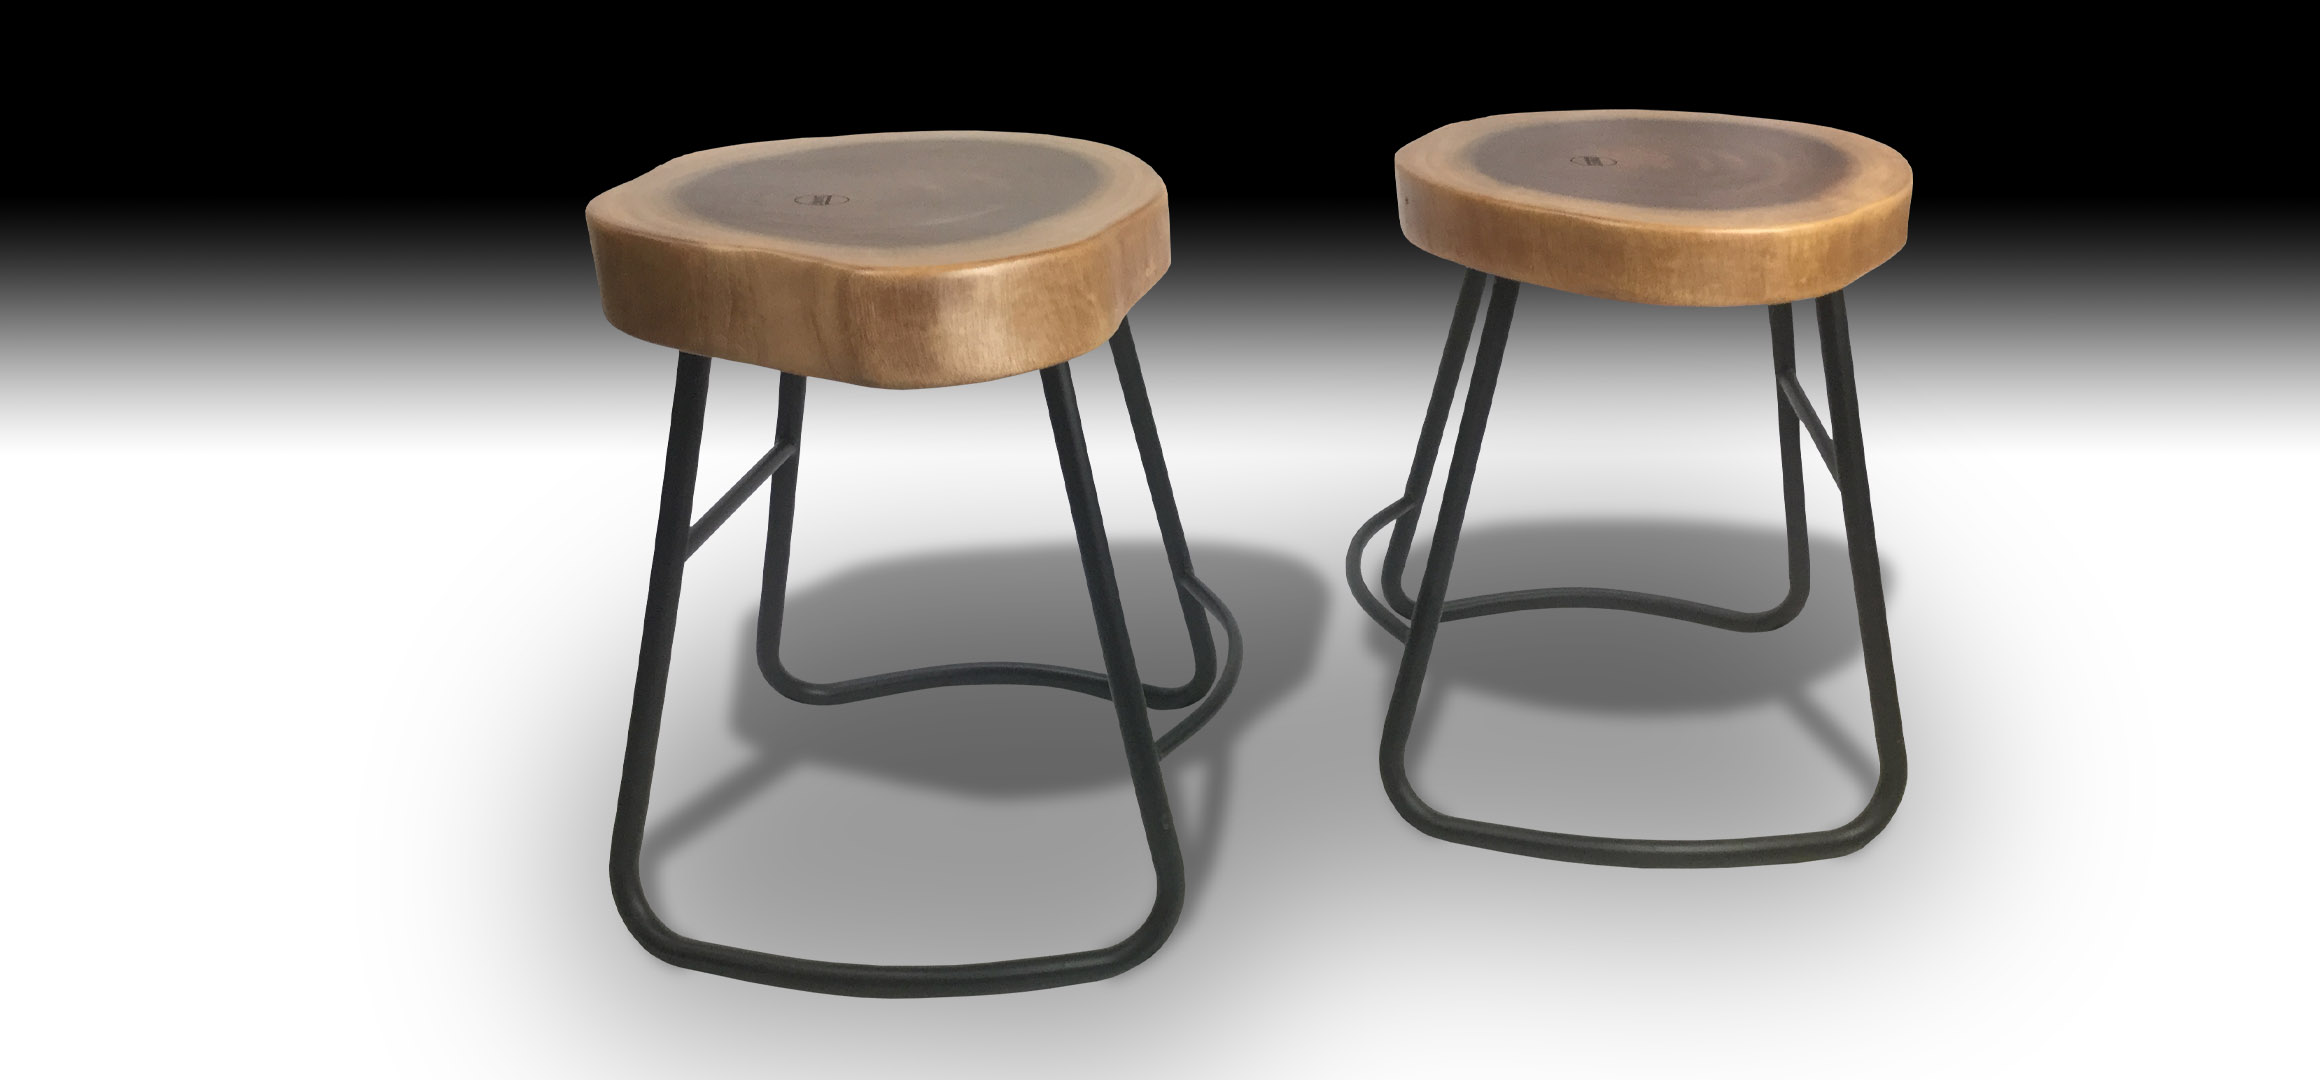 Two Julian Suar wood stools